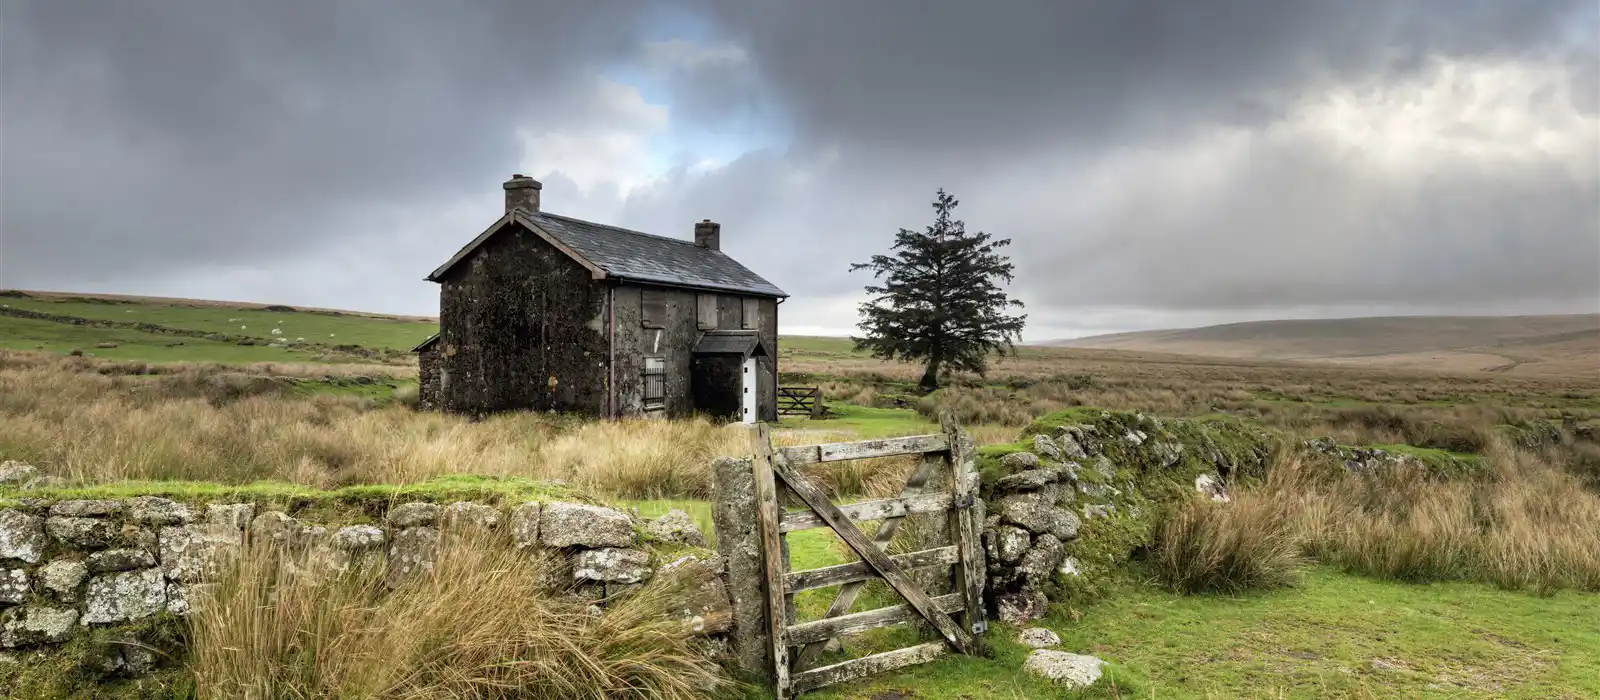 Spooky abandoned farmhouse, Princetown, Dartmoor